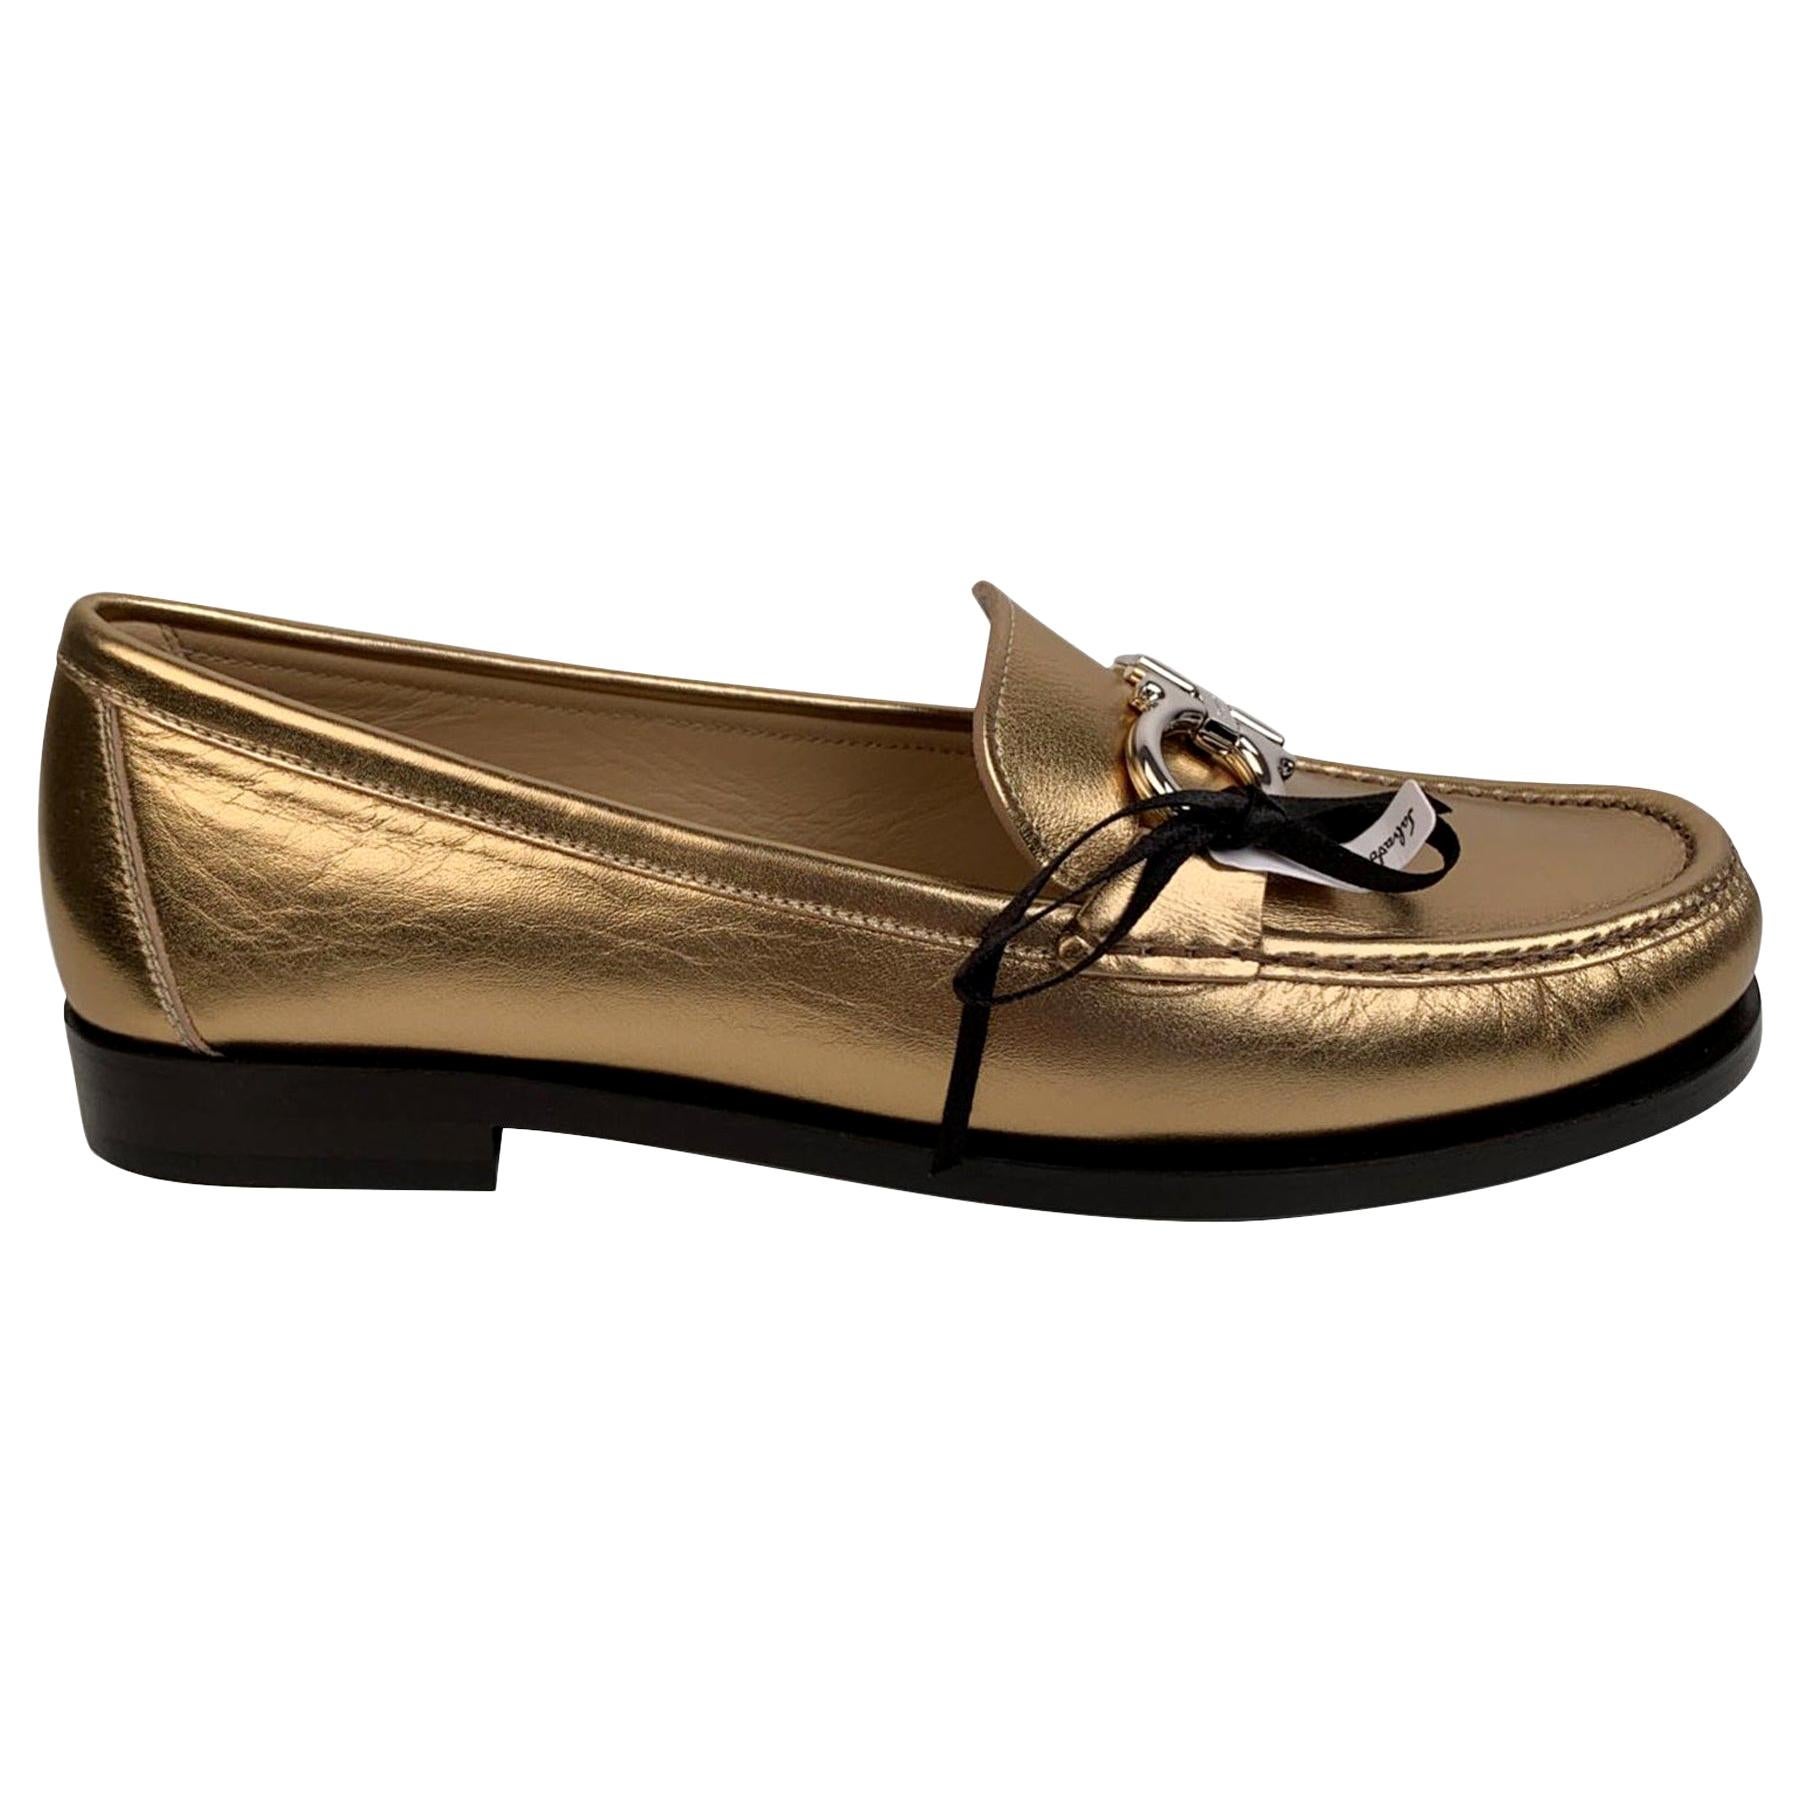 Salvatore Ferragamo Gold Leather Rolo Loafers Moccassins Size US 7C EU 37.5C